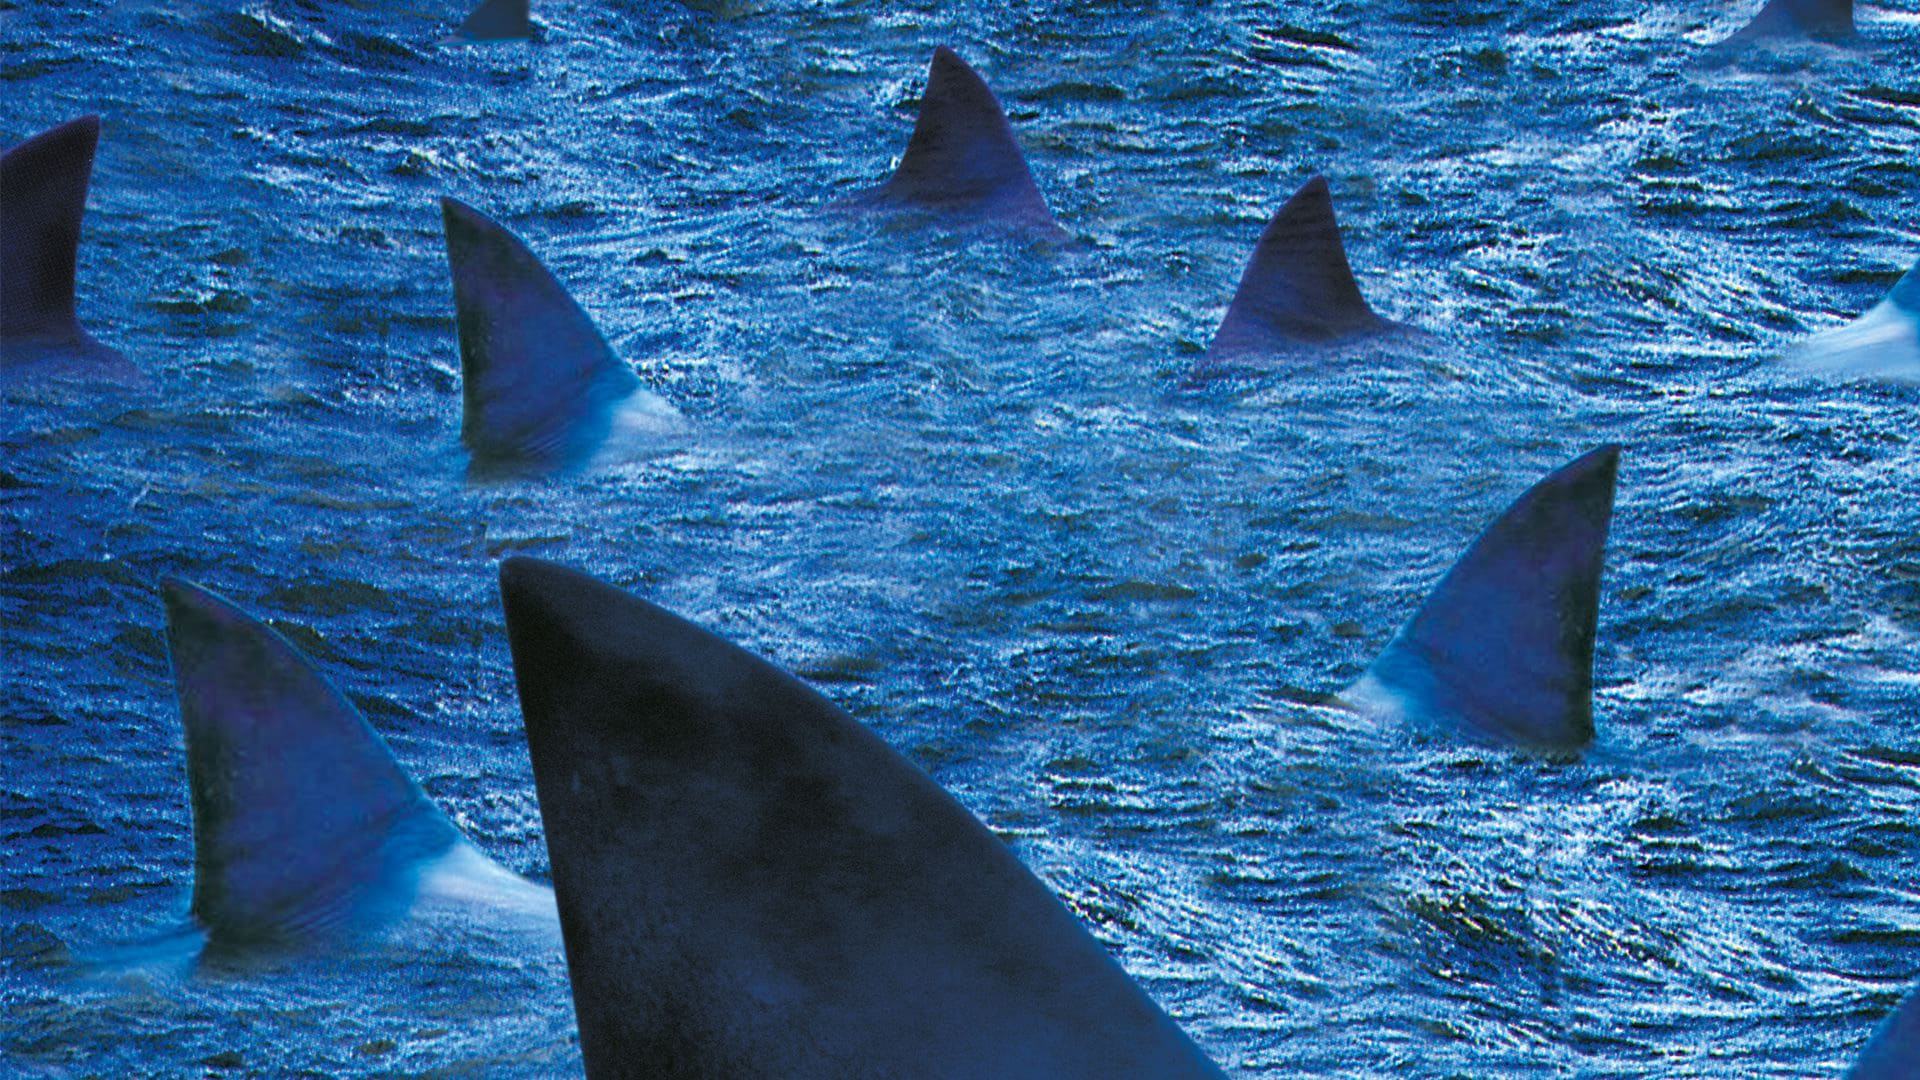 Shark Invasion (2005)